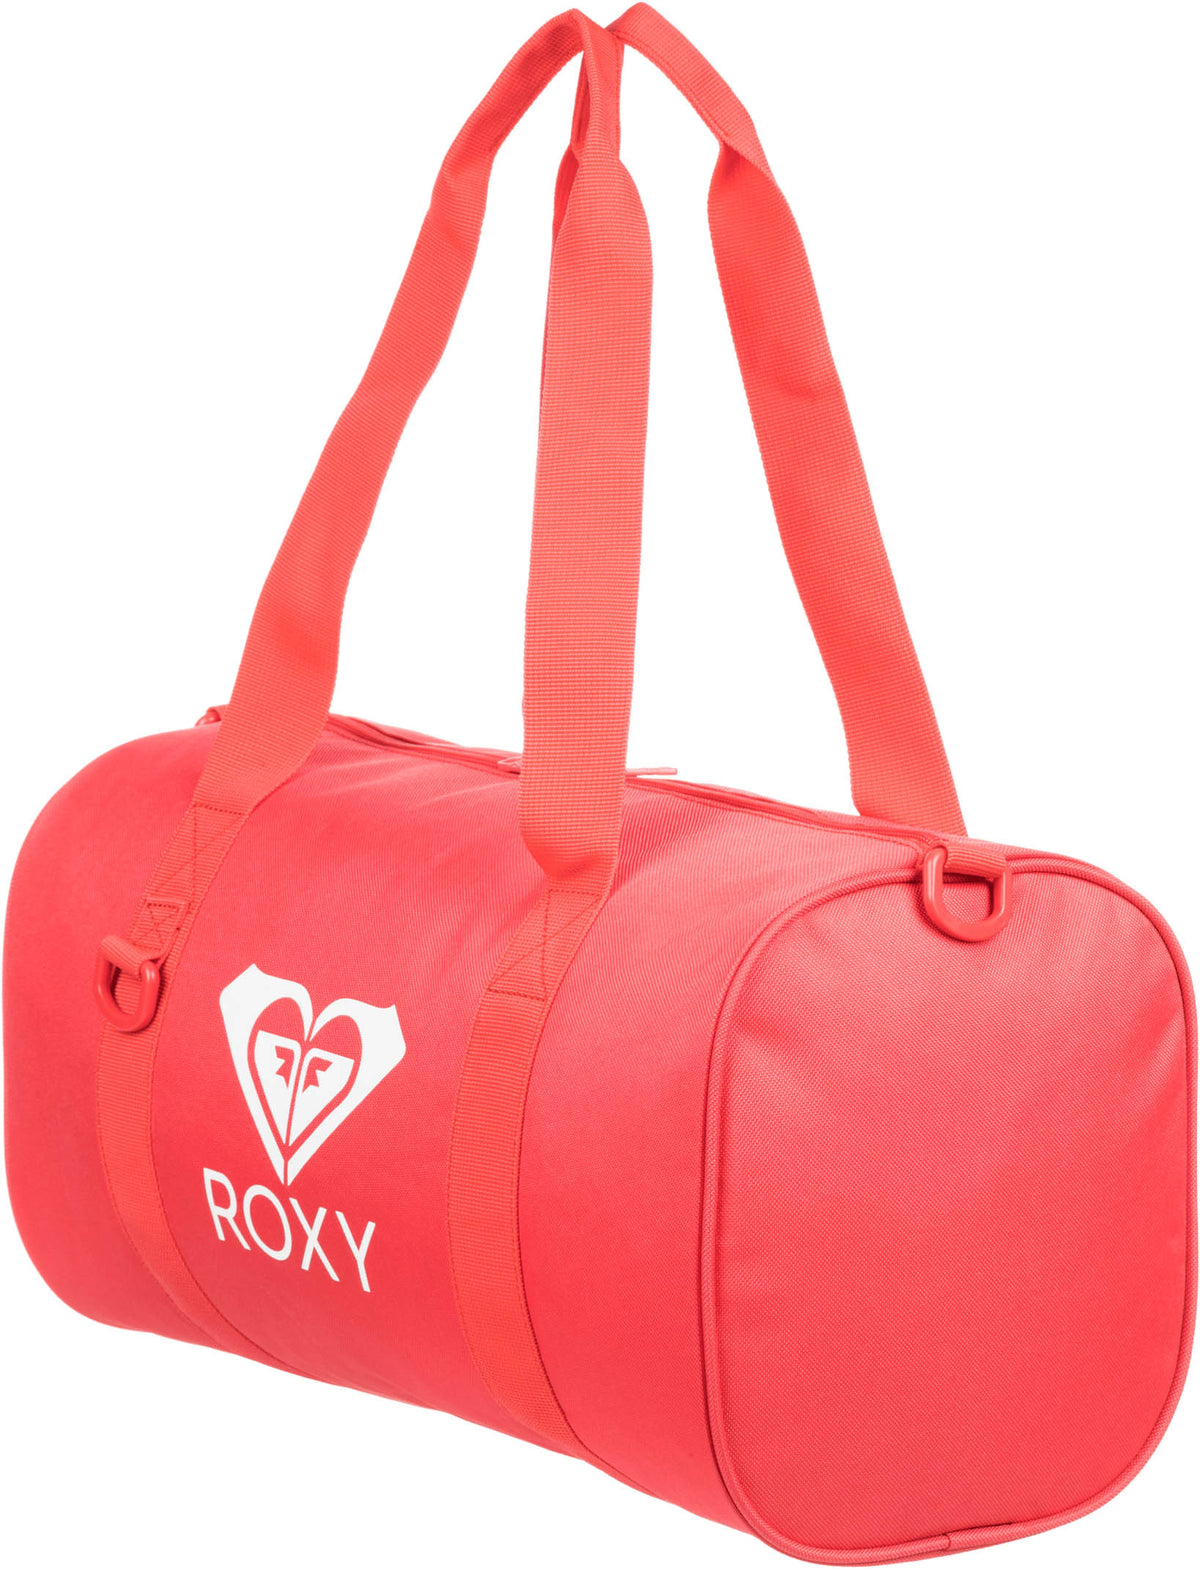 Roxy Vitamin Sea 19L Duffle Bag - Hibiscus